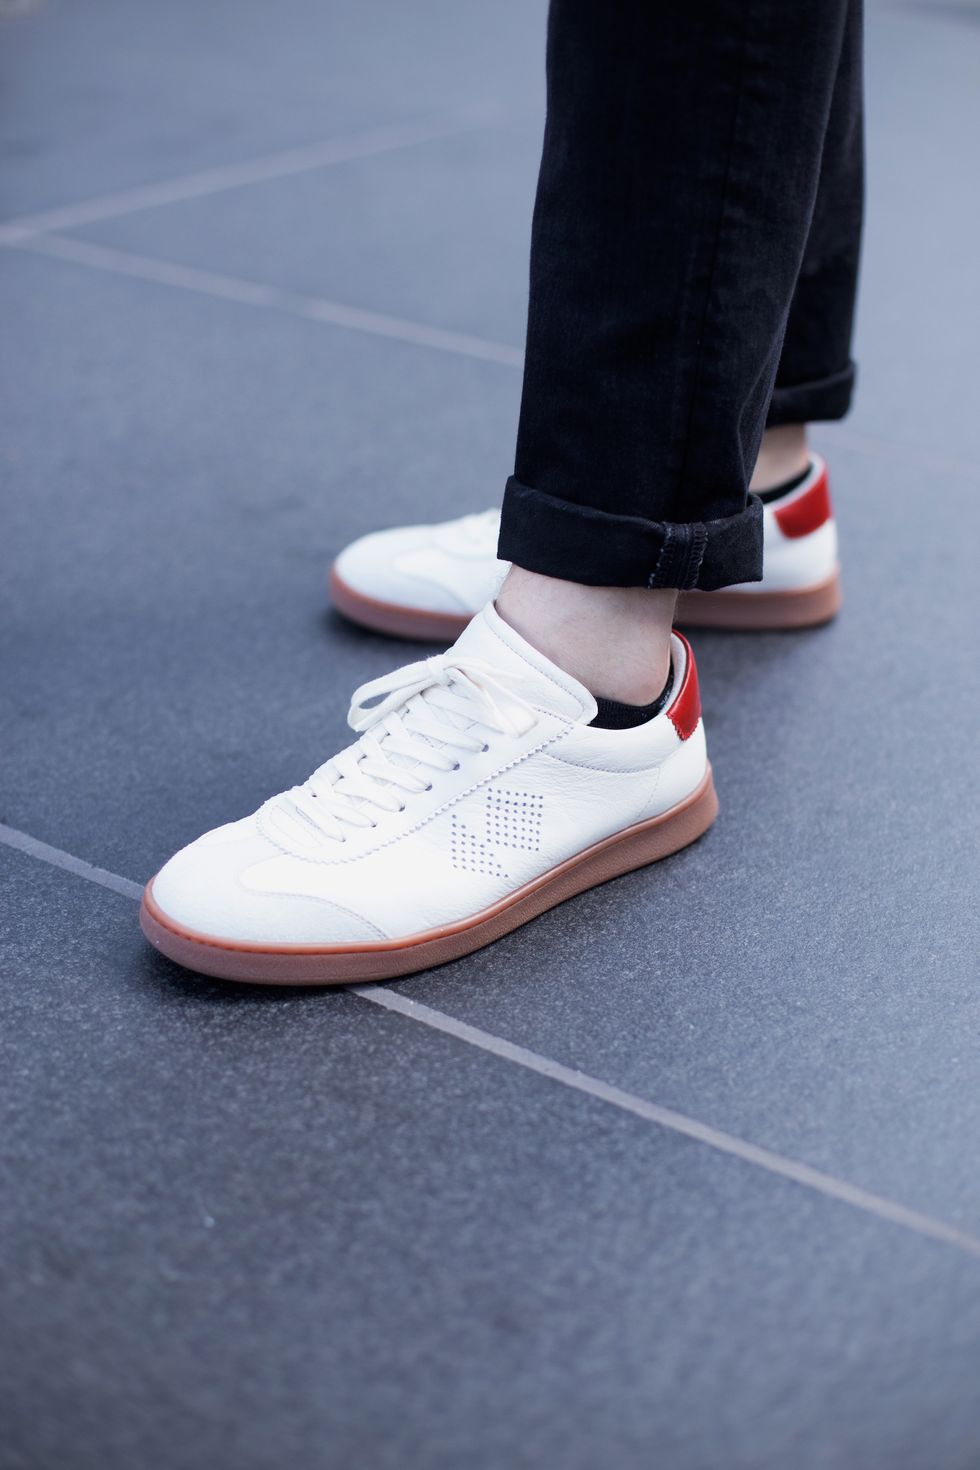 Cyclops Månenytår tredobbelt Esquire Editors Wearing Koio's New Tempo Nero & Bianco Sneakers